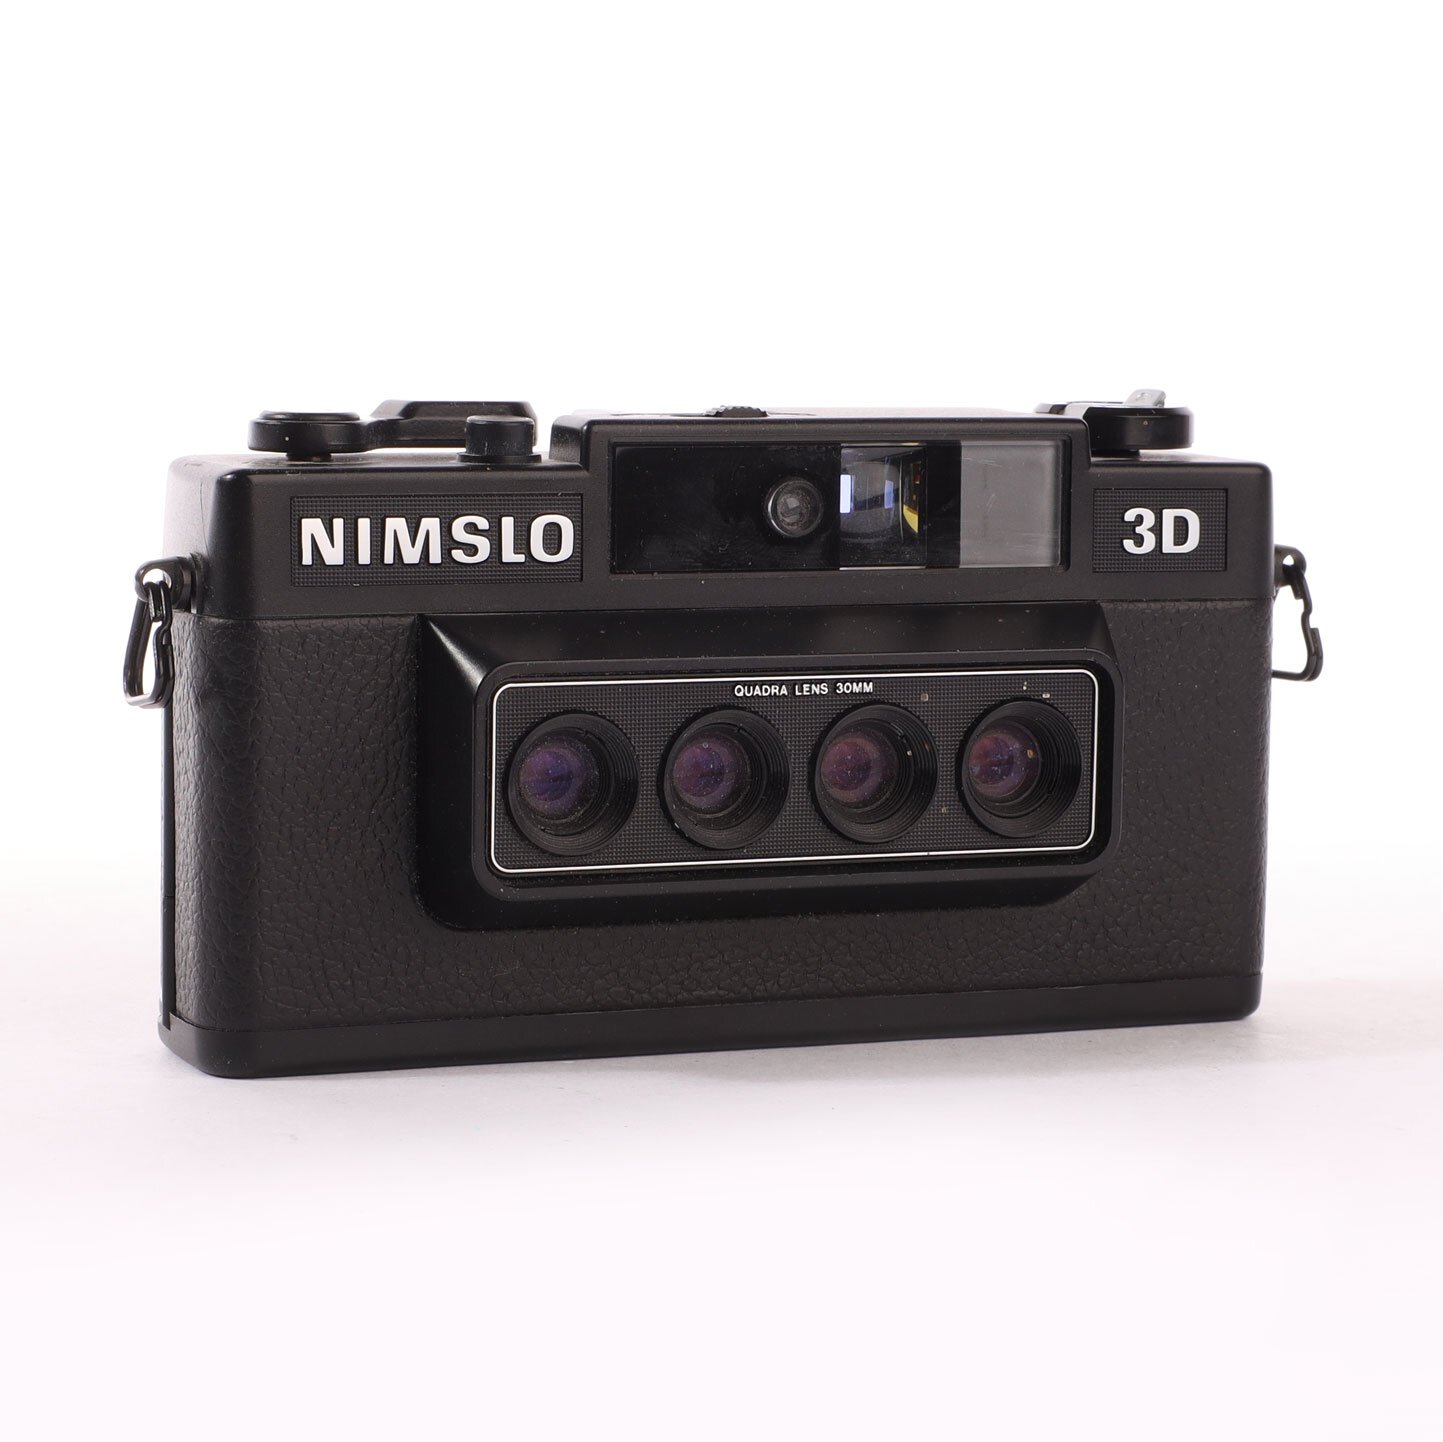 Nimslo 3D Quadra Lens 30mm